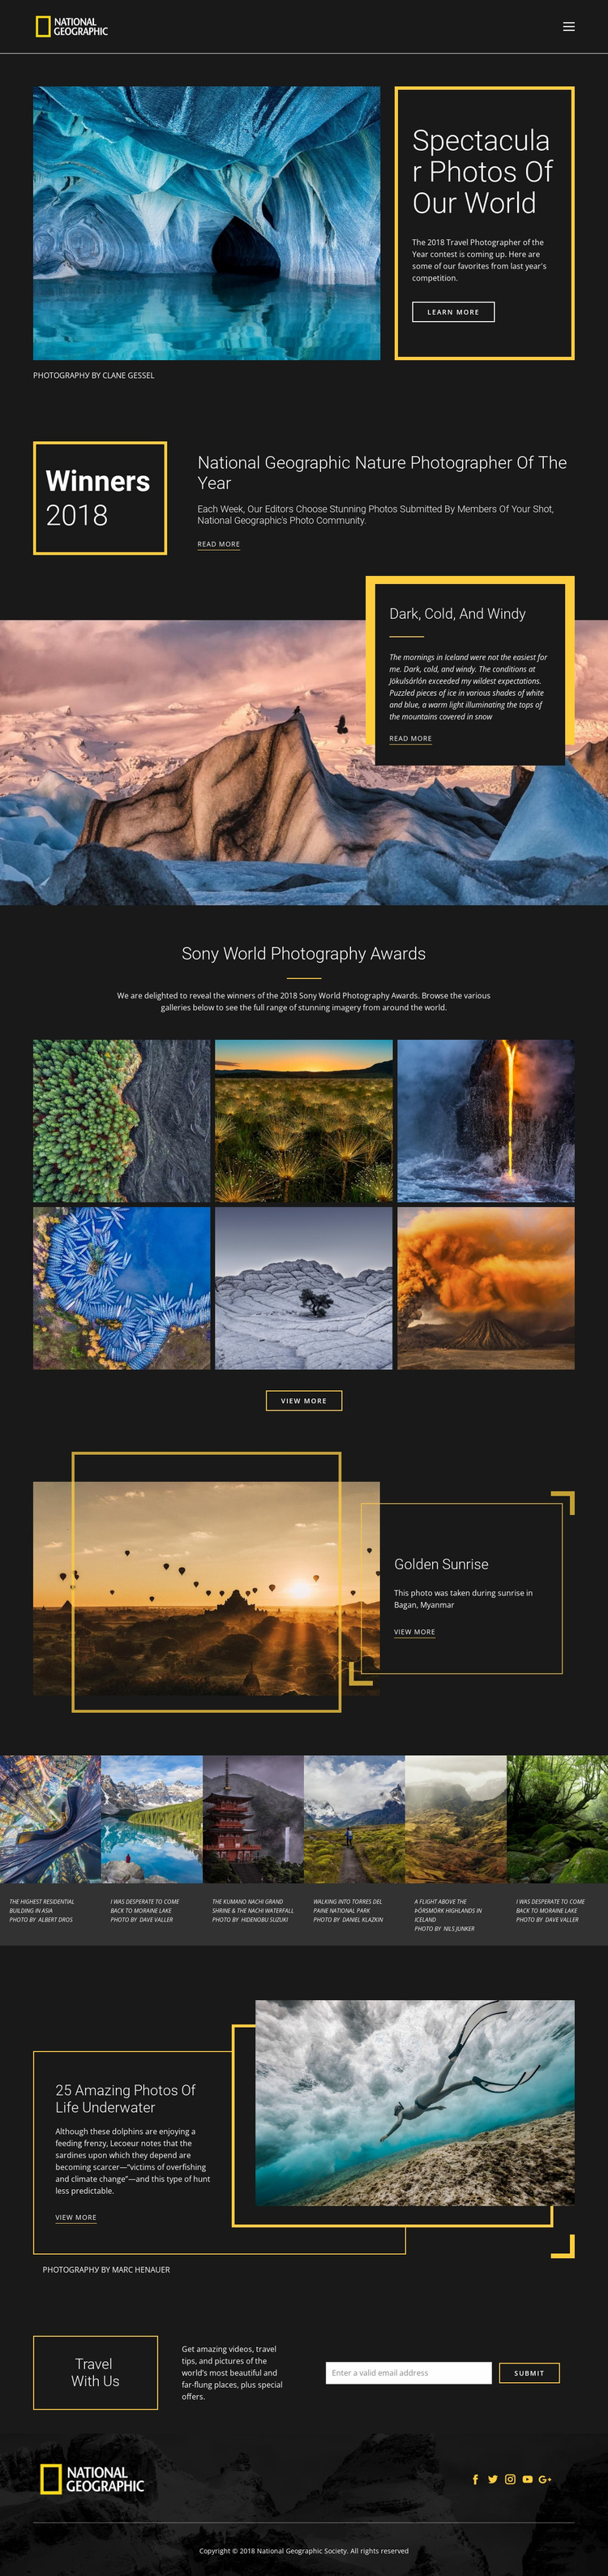 Pictures of nature Website Design